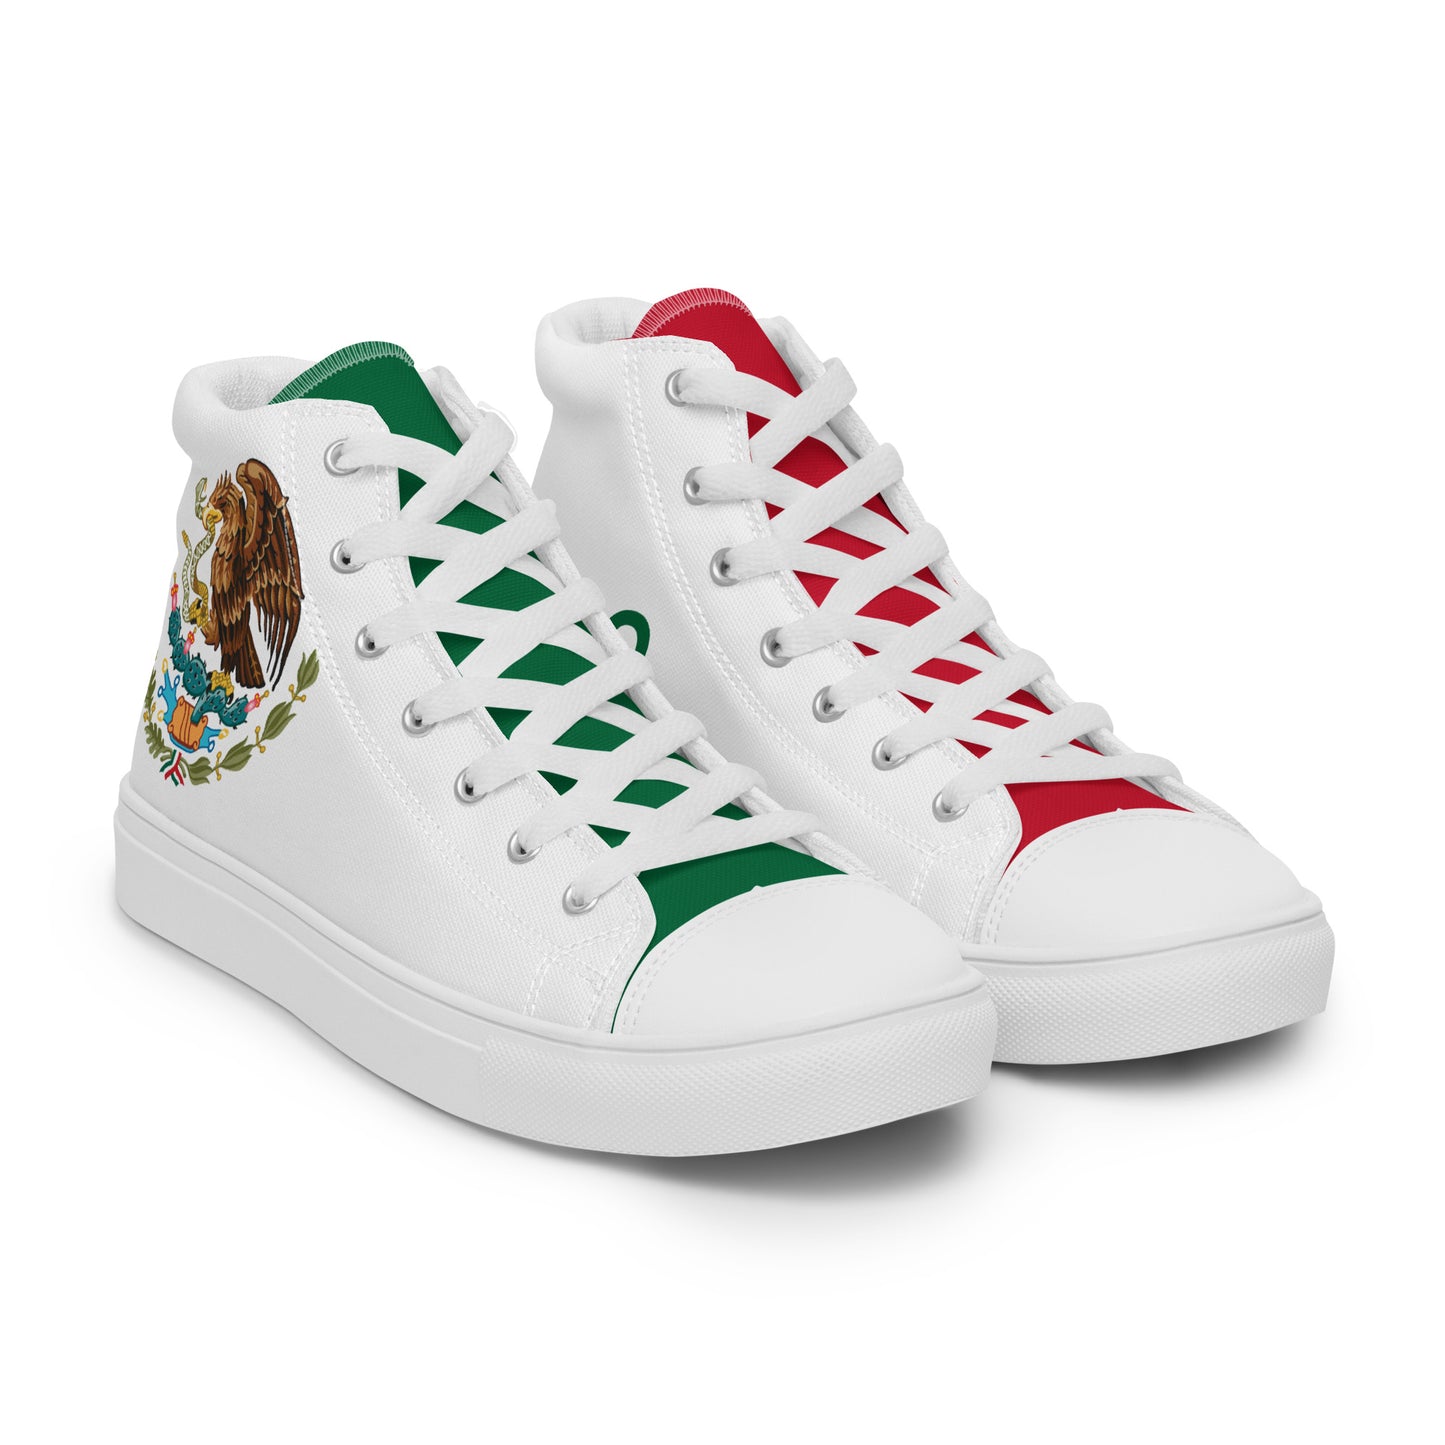 México - Women - White - High top shoes